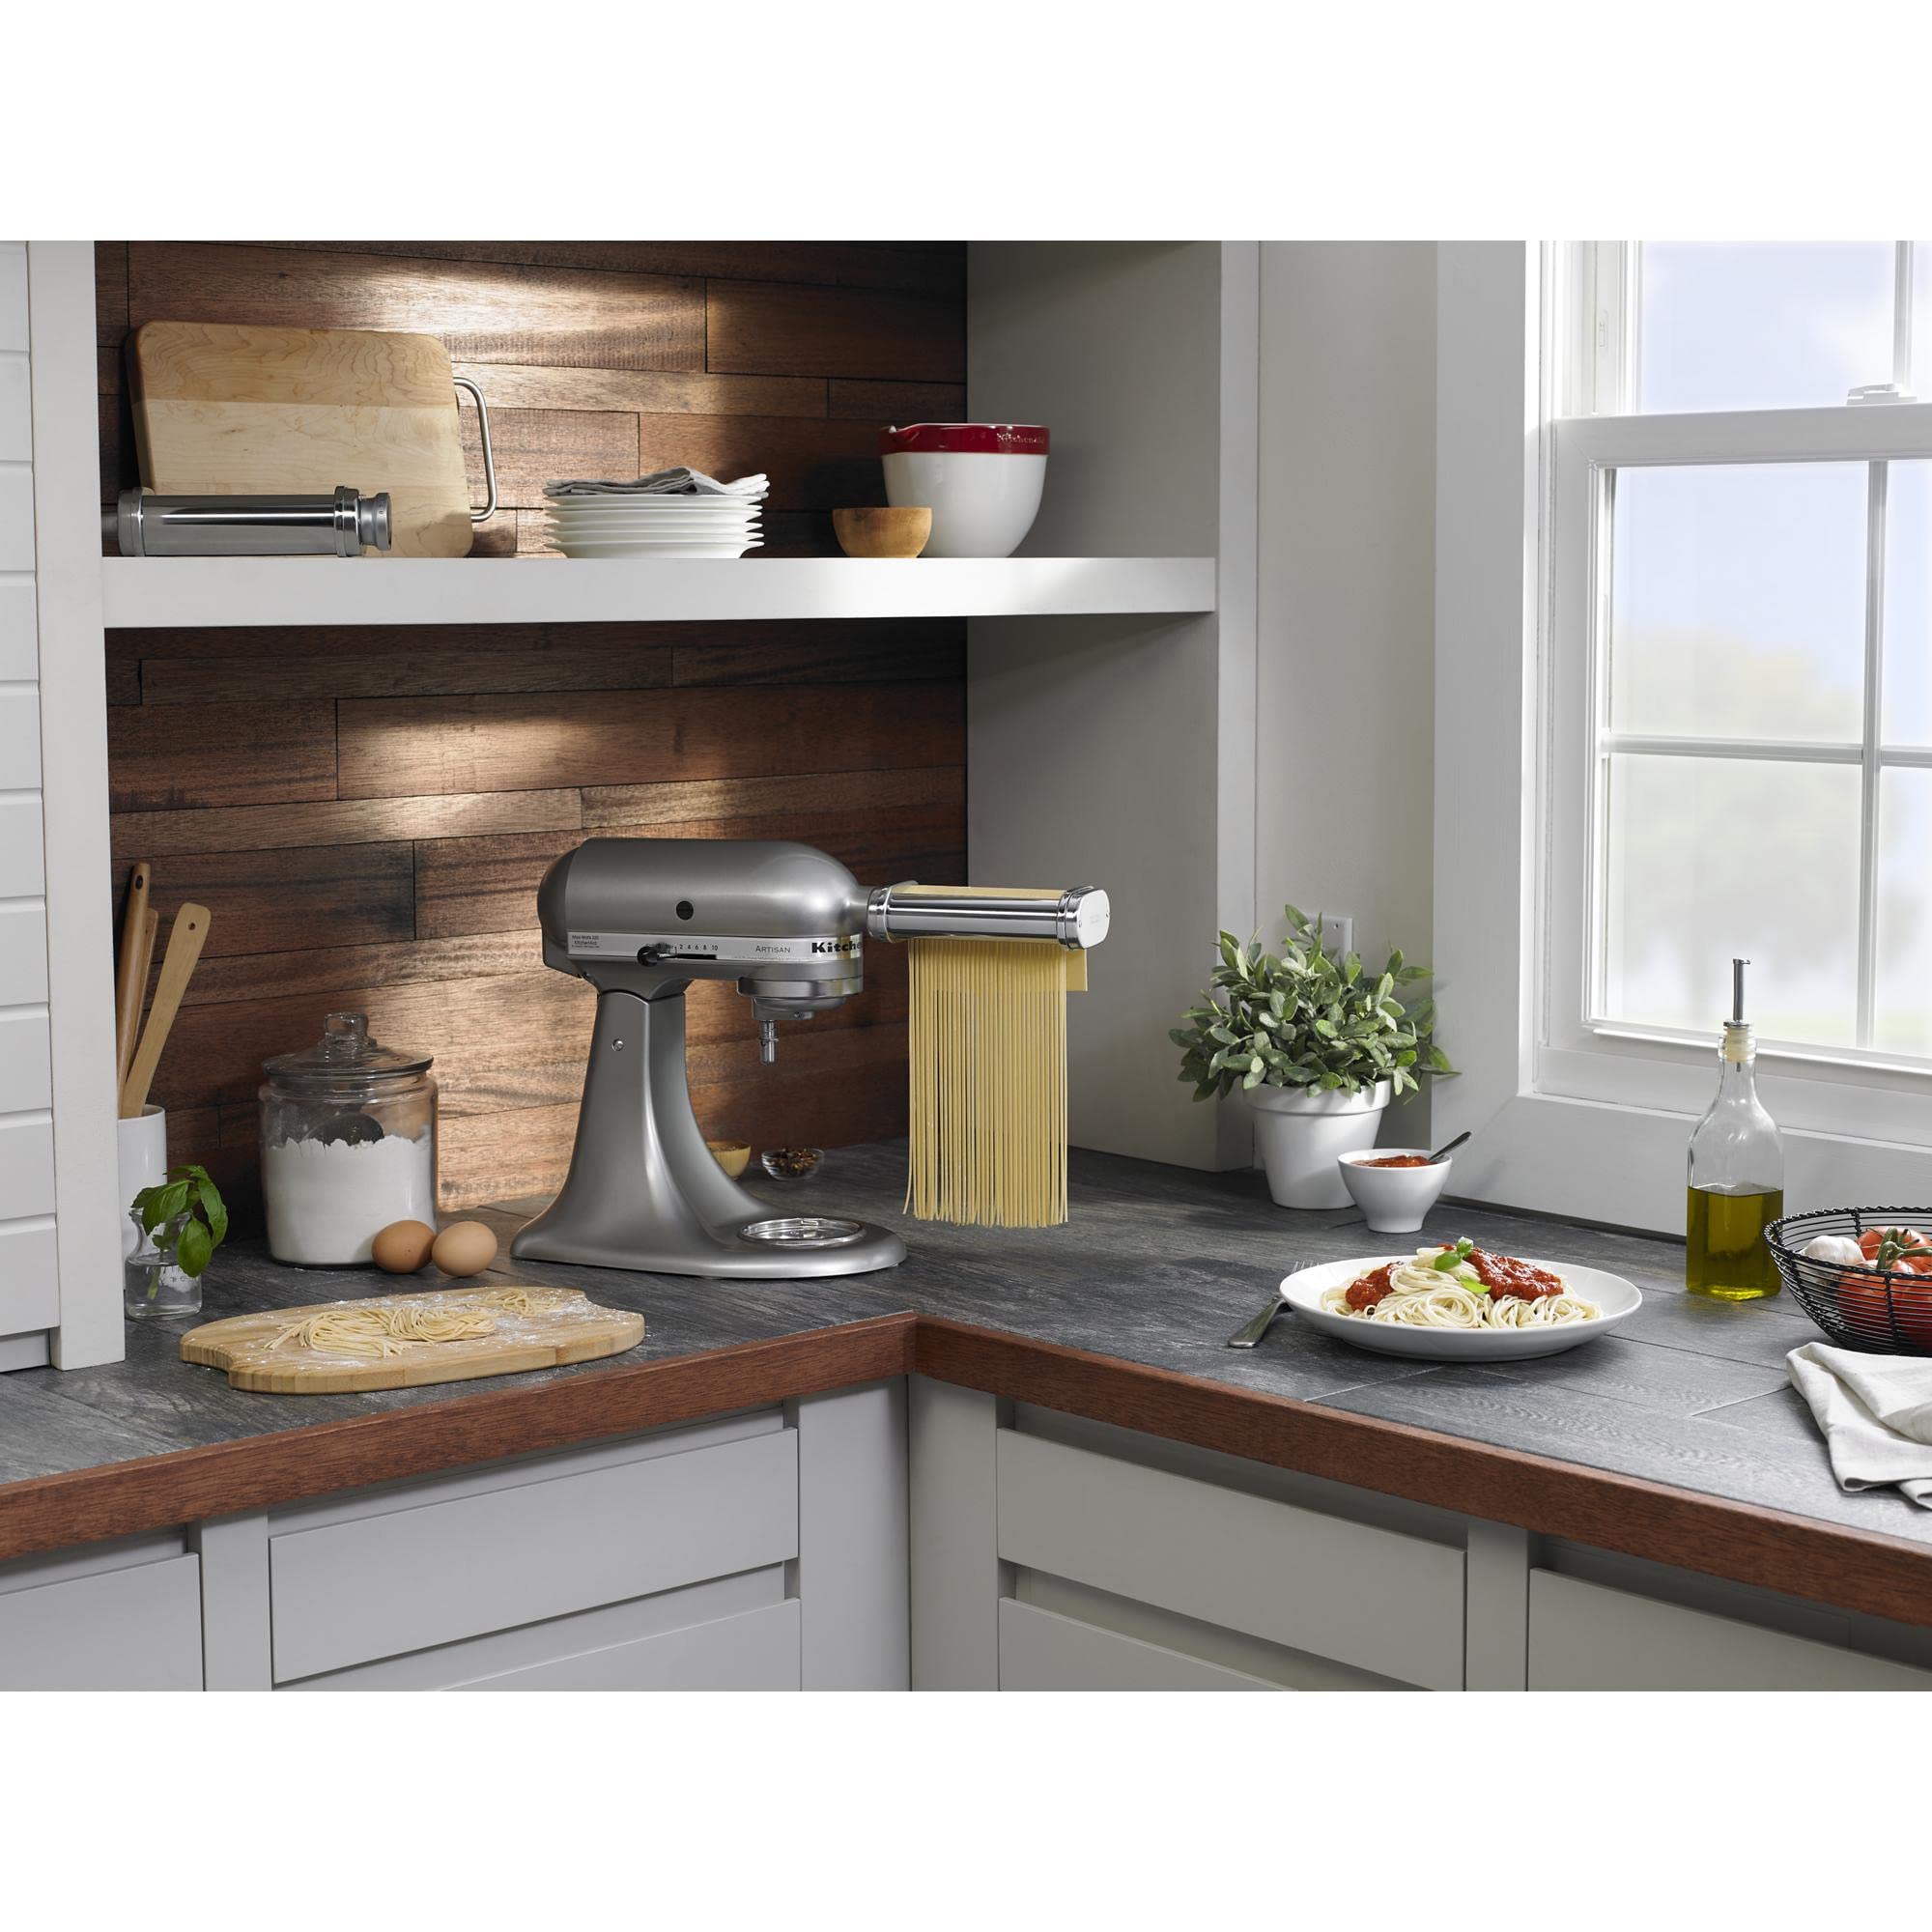 KitchenAid® 7 Quart Bowl-Lift Stand Mixer, Cast Iron Black & KSMPDX Pasta Deluxe Set Stand Mixer Attachment, 5 Piece, Stainless Steel